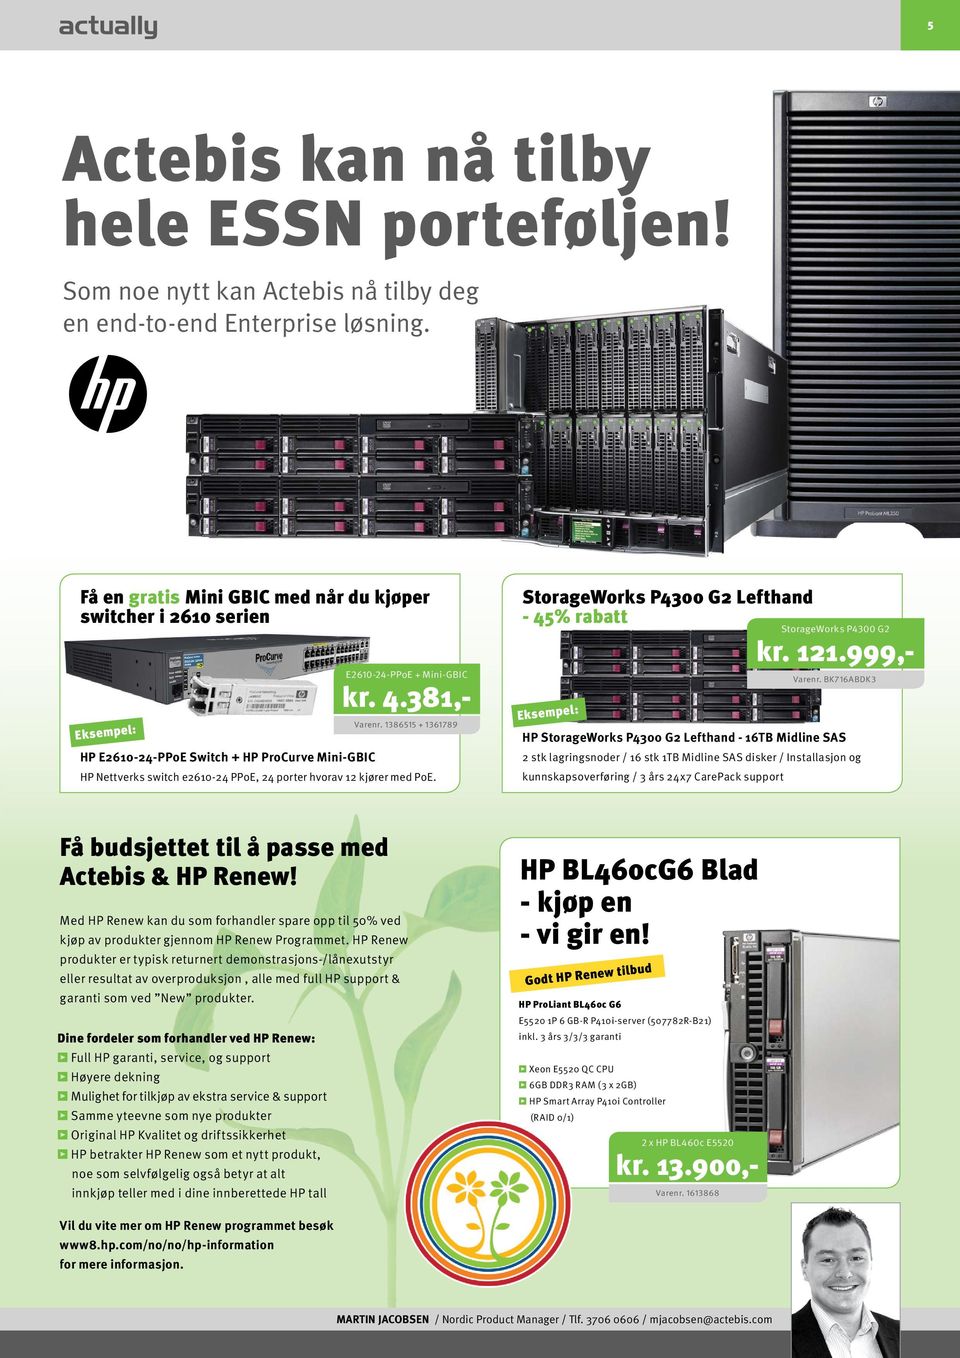 StoragWorks P4300 G2 Lfthand - 45% rabatt Eksmpl: StoragWorks P4300 G2 kr. 121.999,- Varnr.